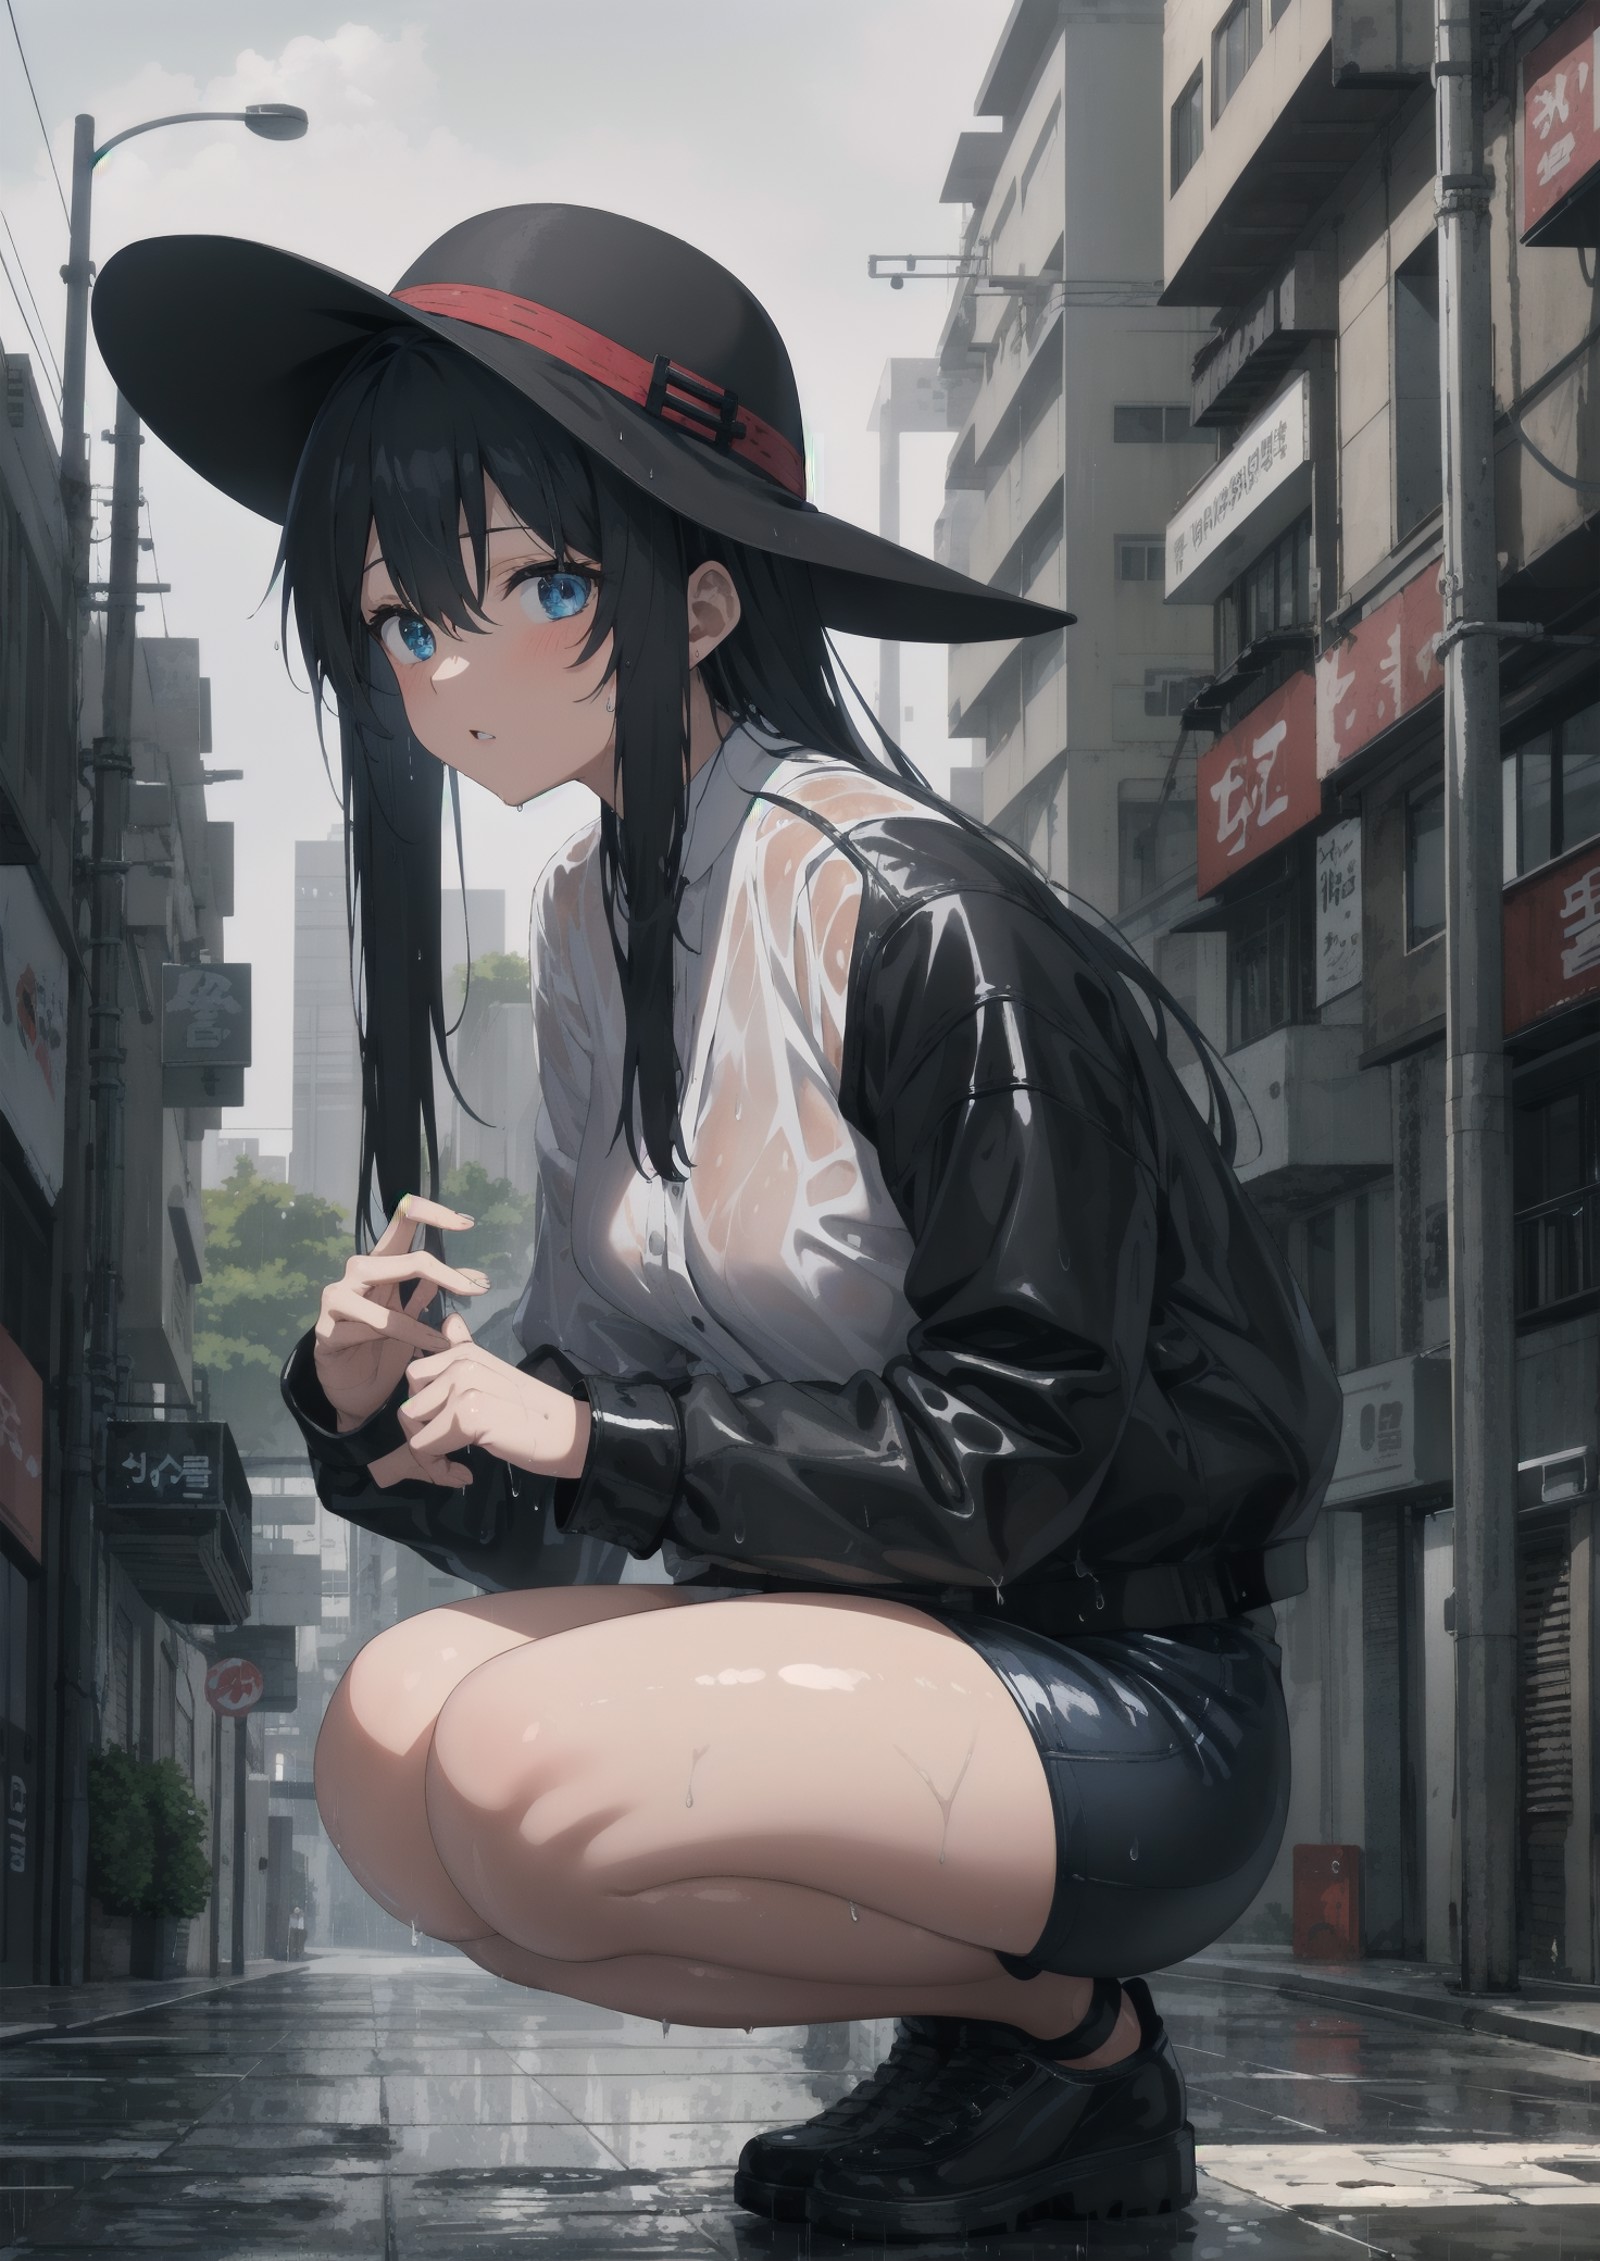 (highres, absurdres:1.1), full art illustration, BREAK
(plump:1.1), a girl in a black hat and white shirt, anime cyberpunk...